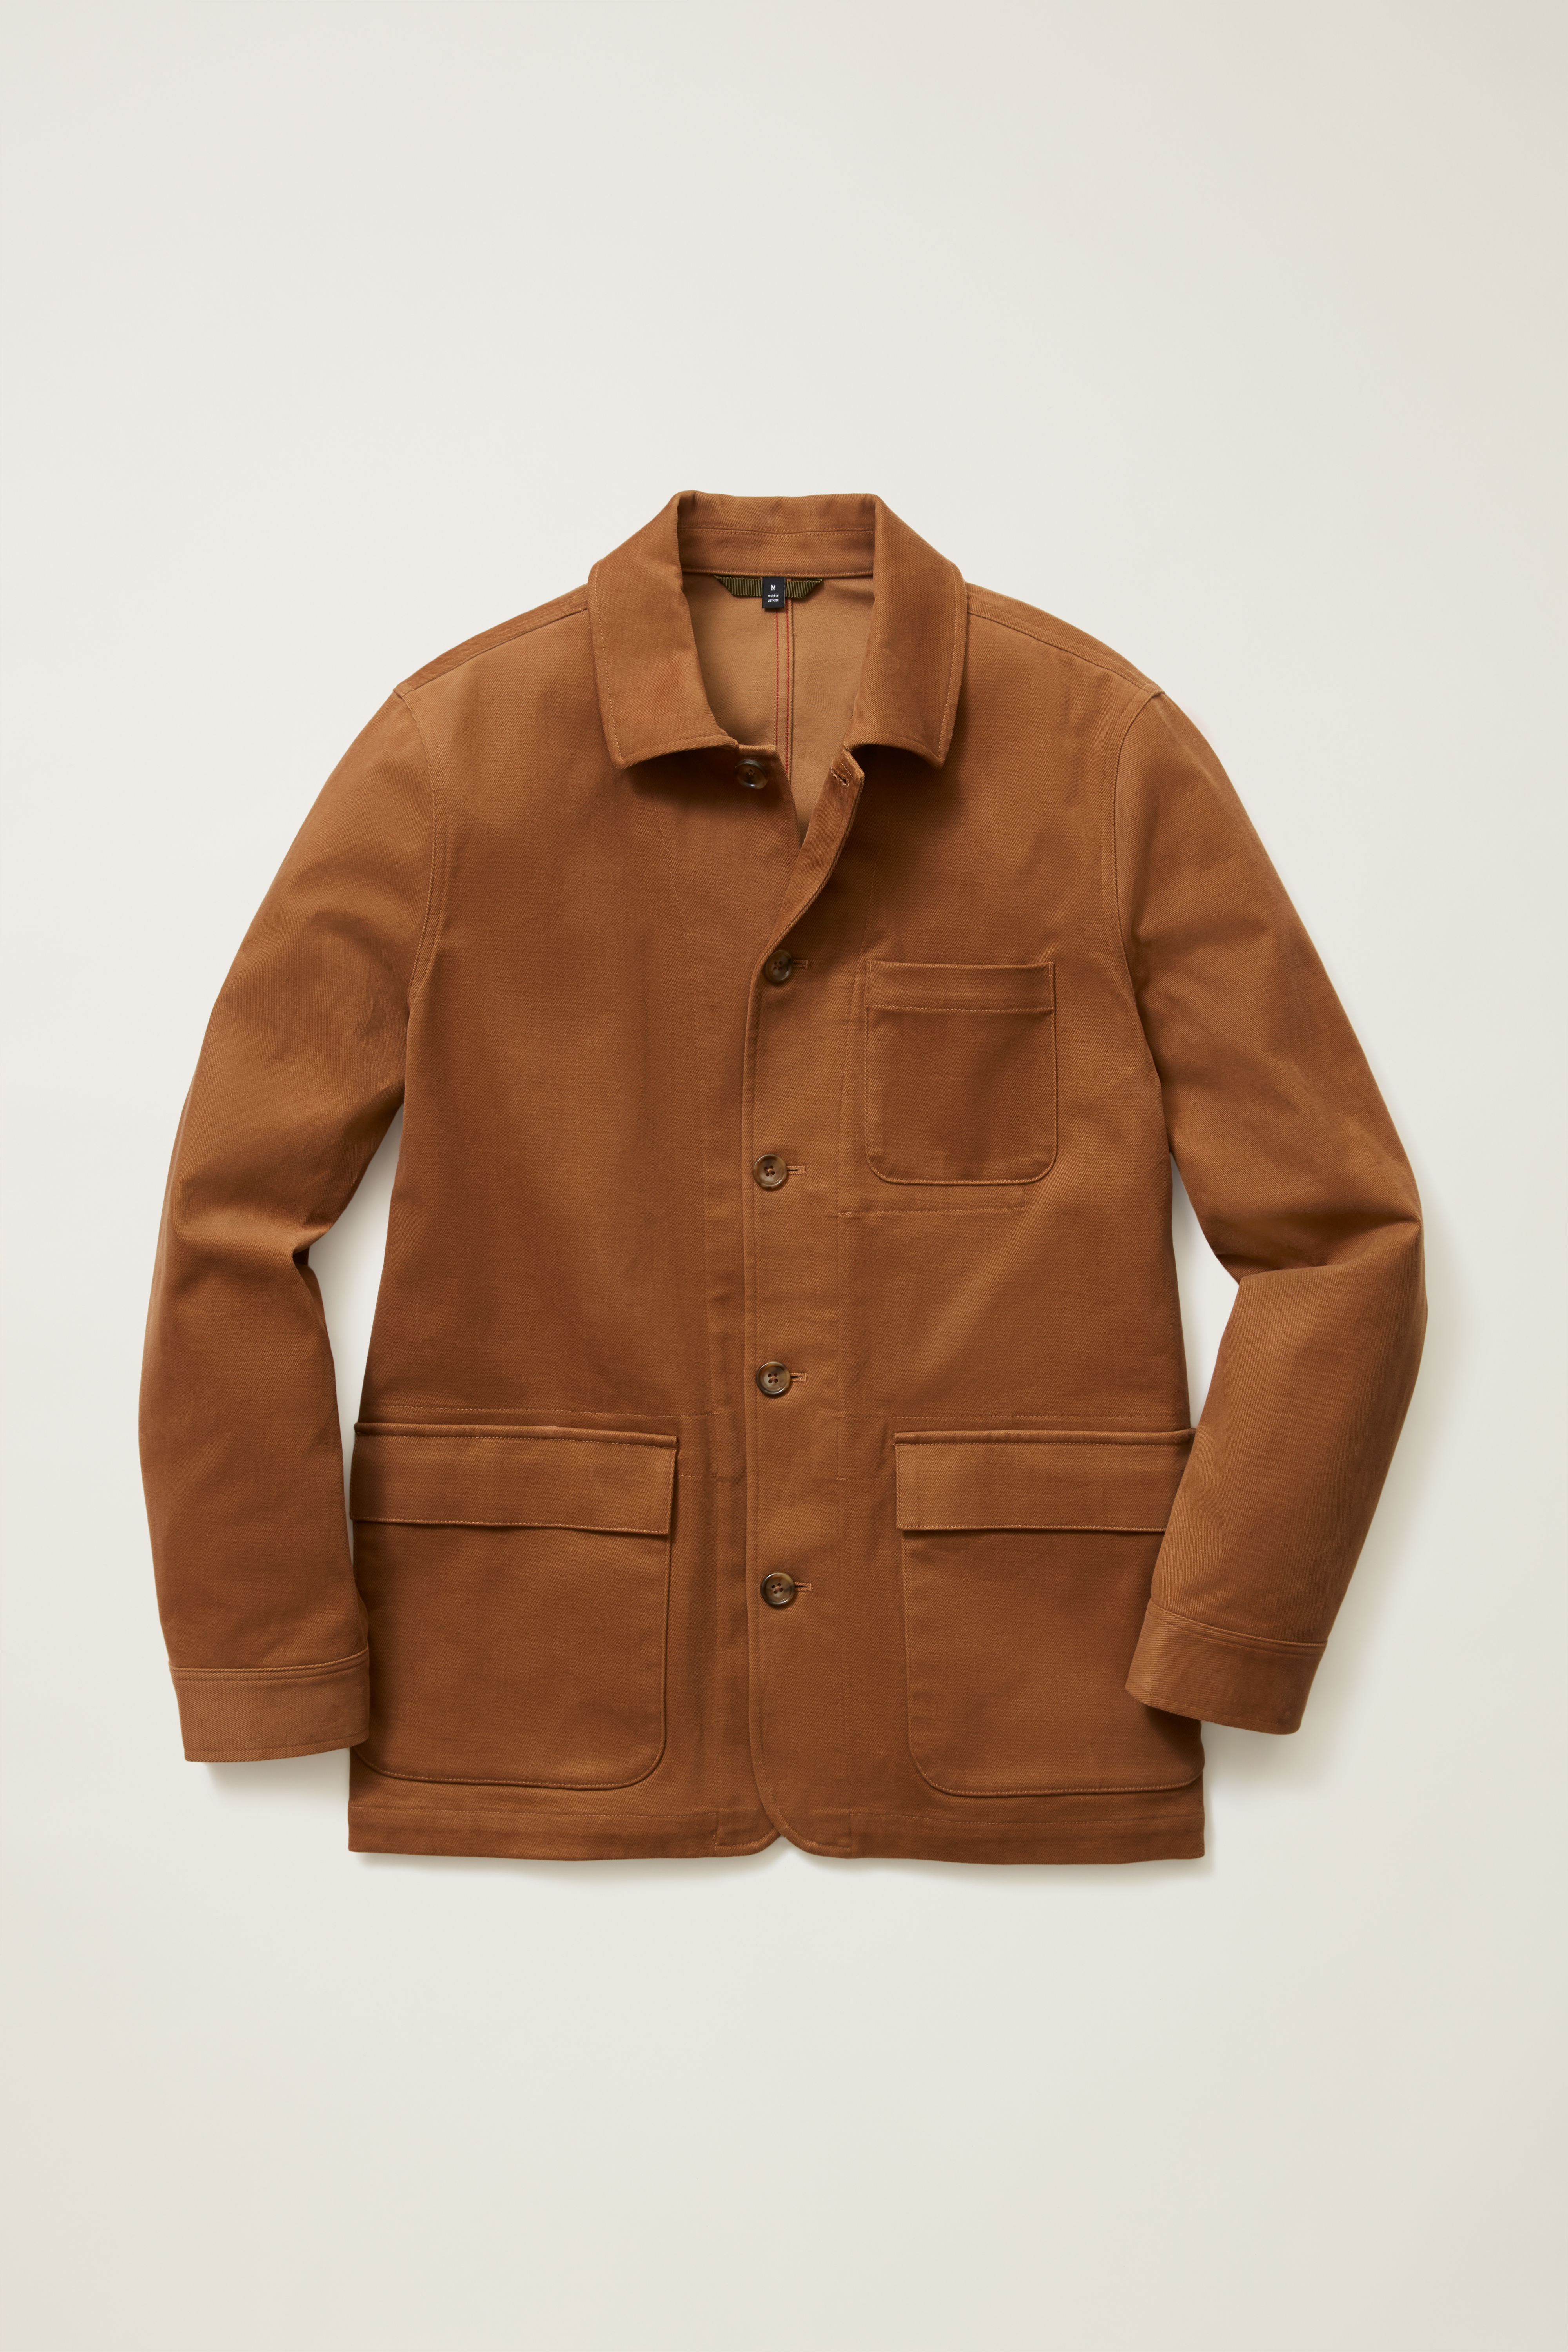 Sueded Italian Cotton Chore Suit Jacket